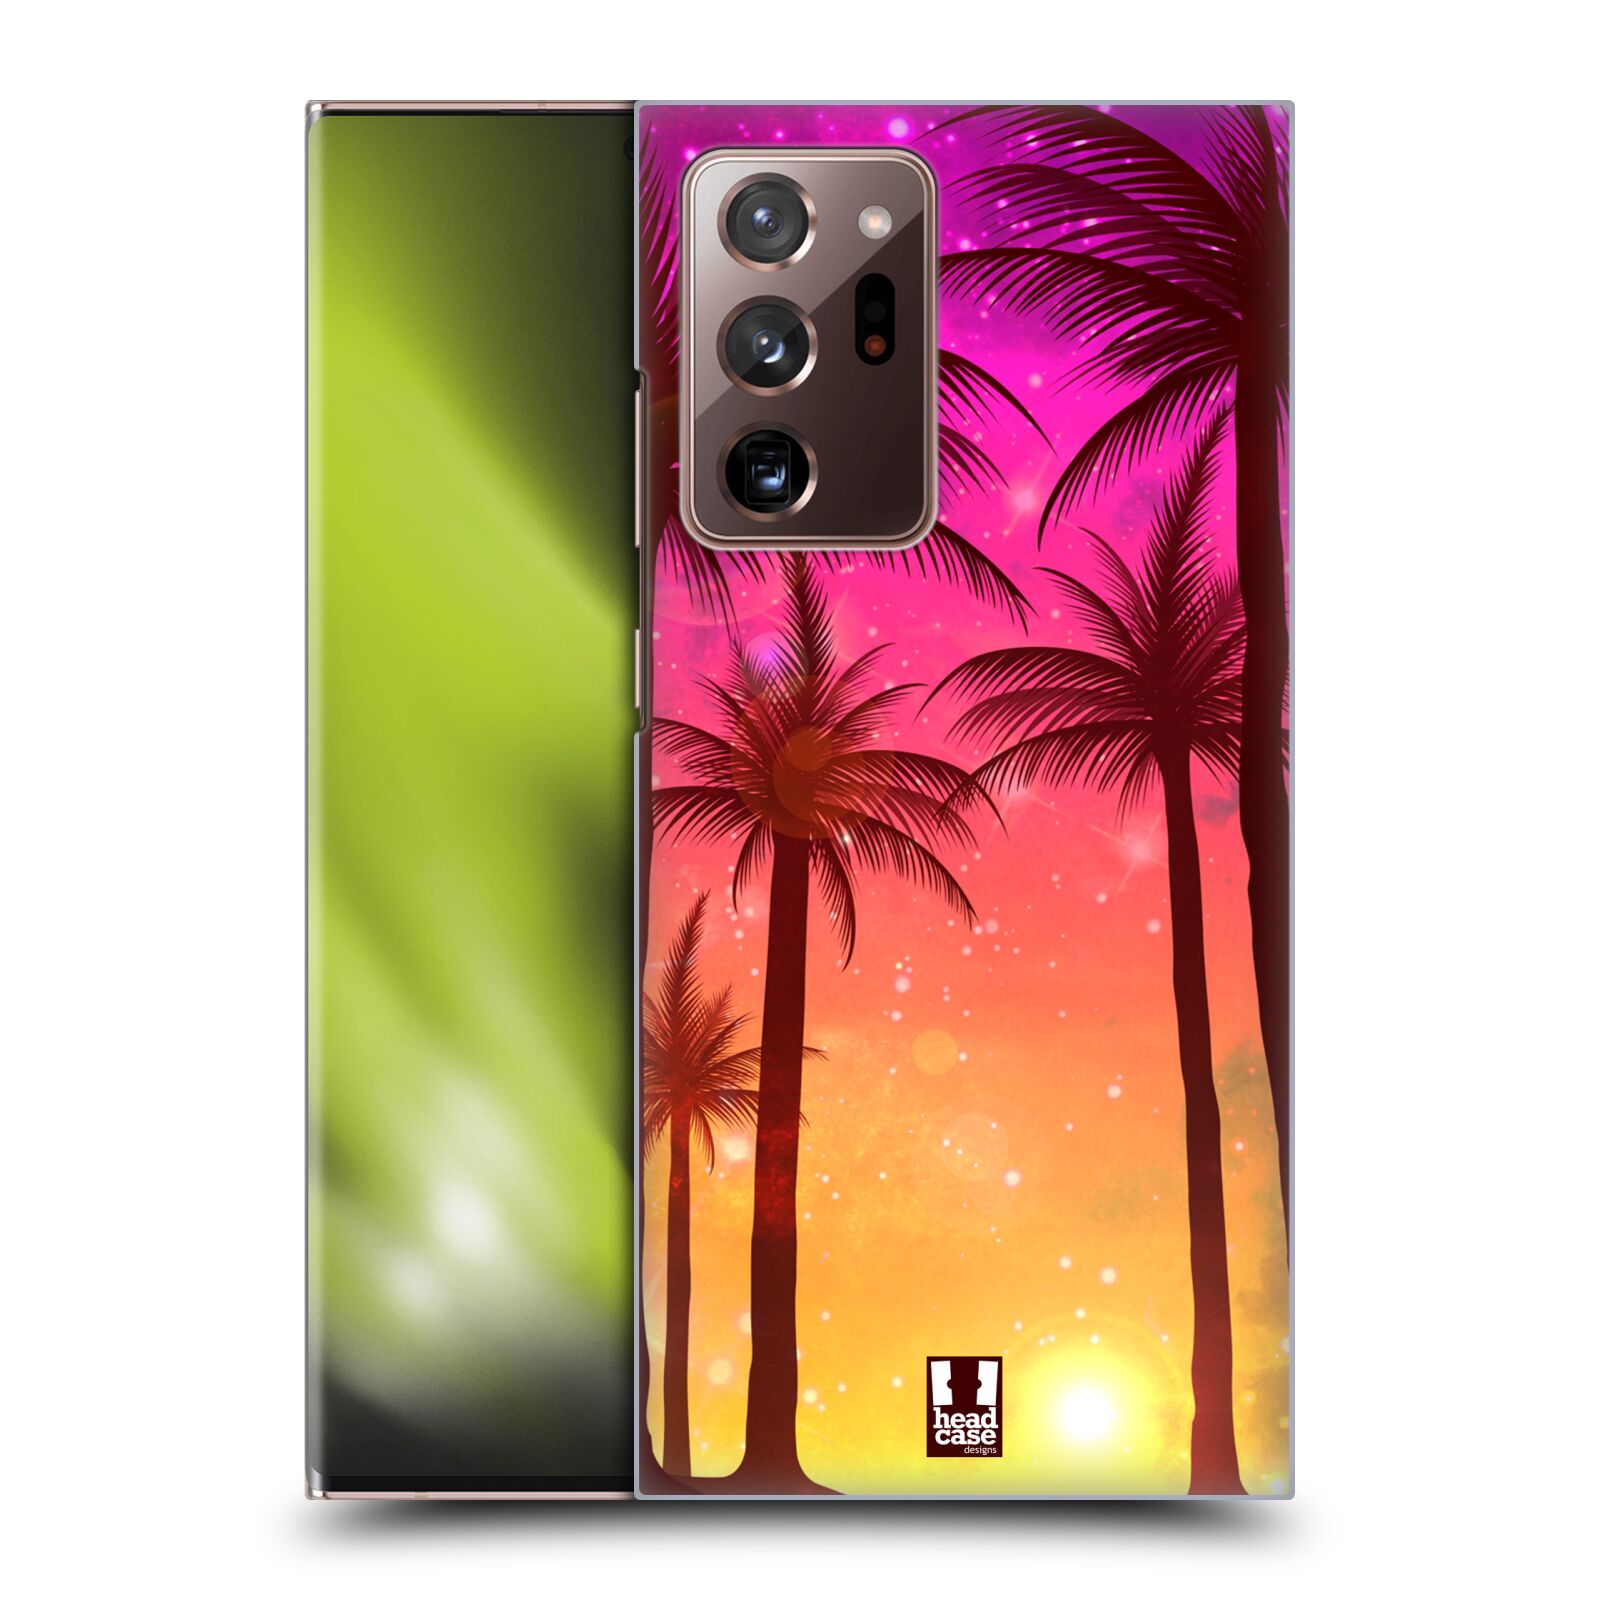 Plastový obal HEAD CASE na mobil Samsung Galaxy Note 20 ULTRA vzor Kreslený motiv silueta moře a palmy RŮŽOVÁ